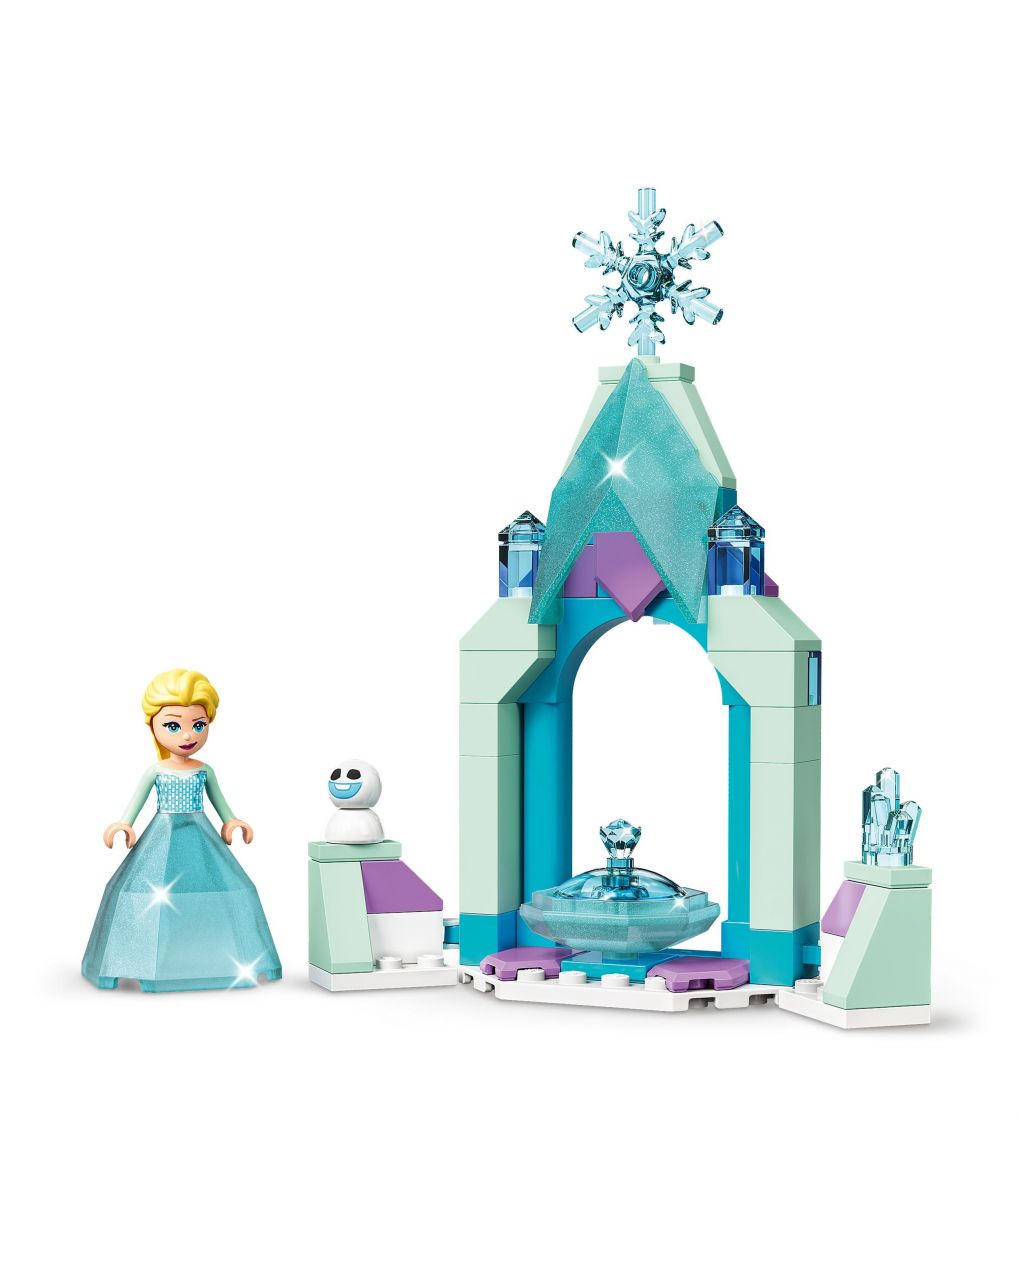 Lego disney princess - elsa's castle courtyard - 43199 - LEGO